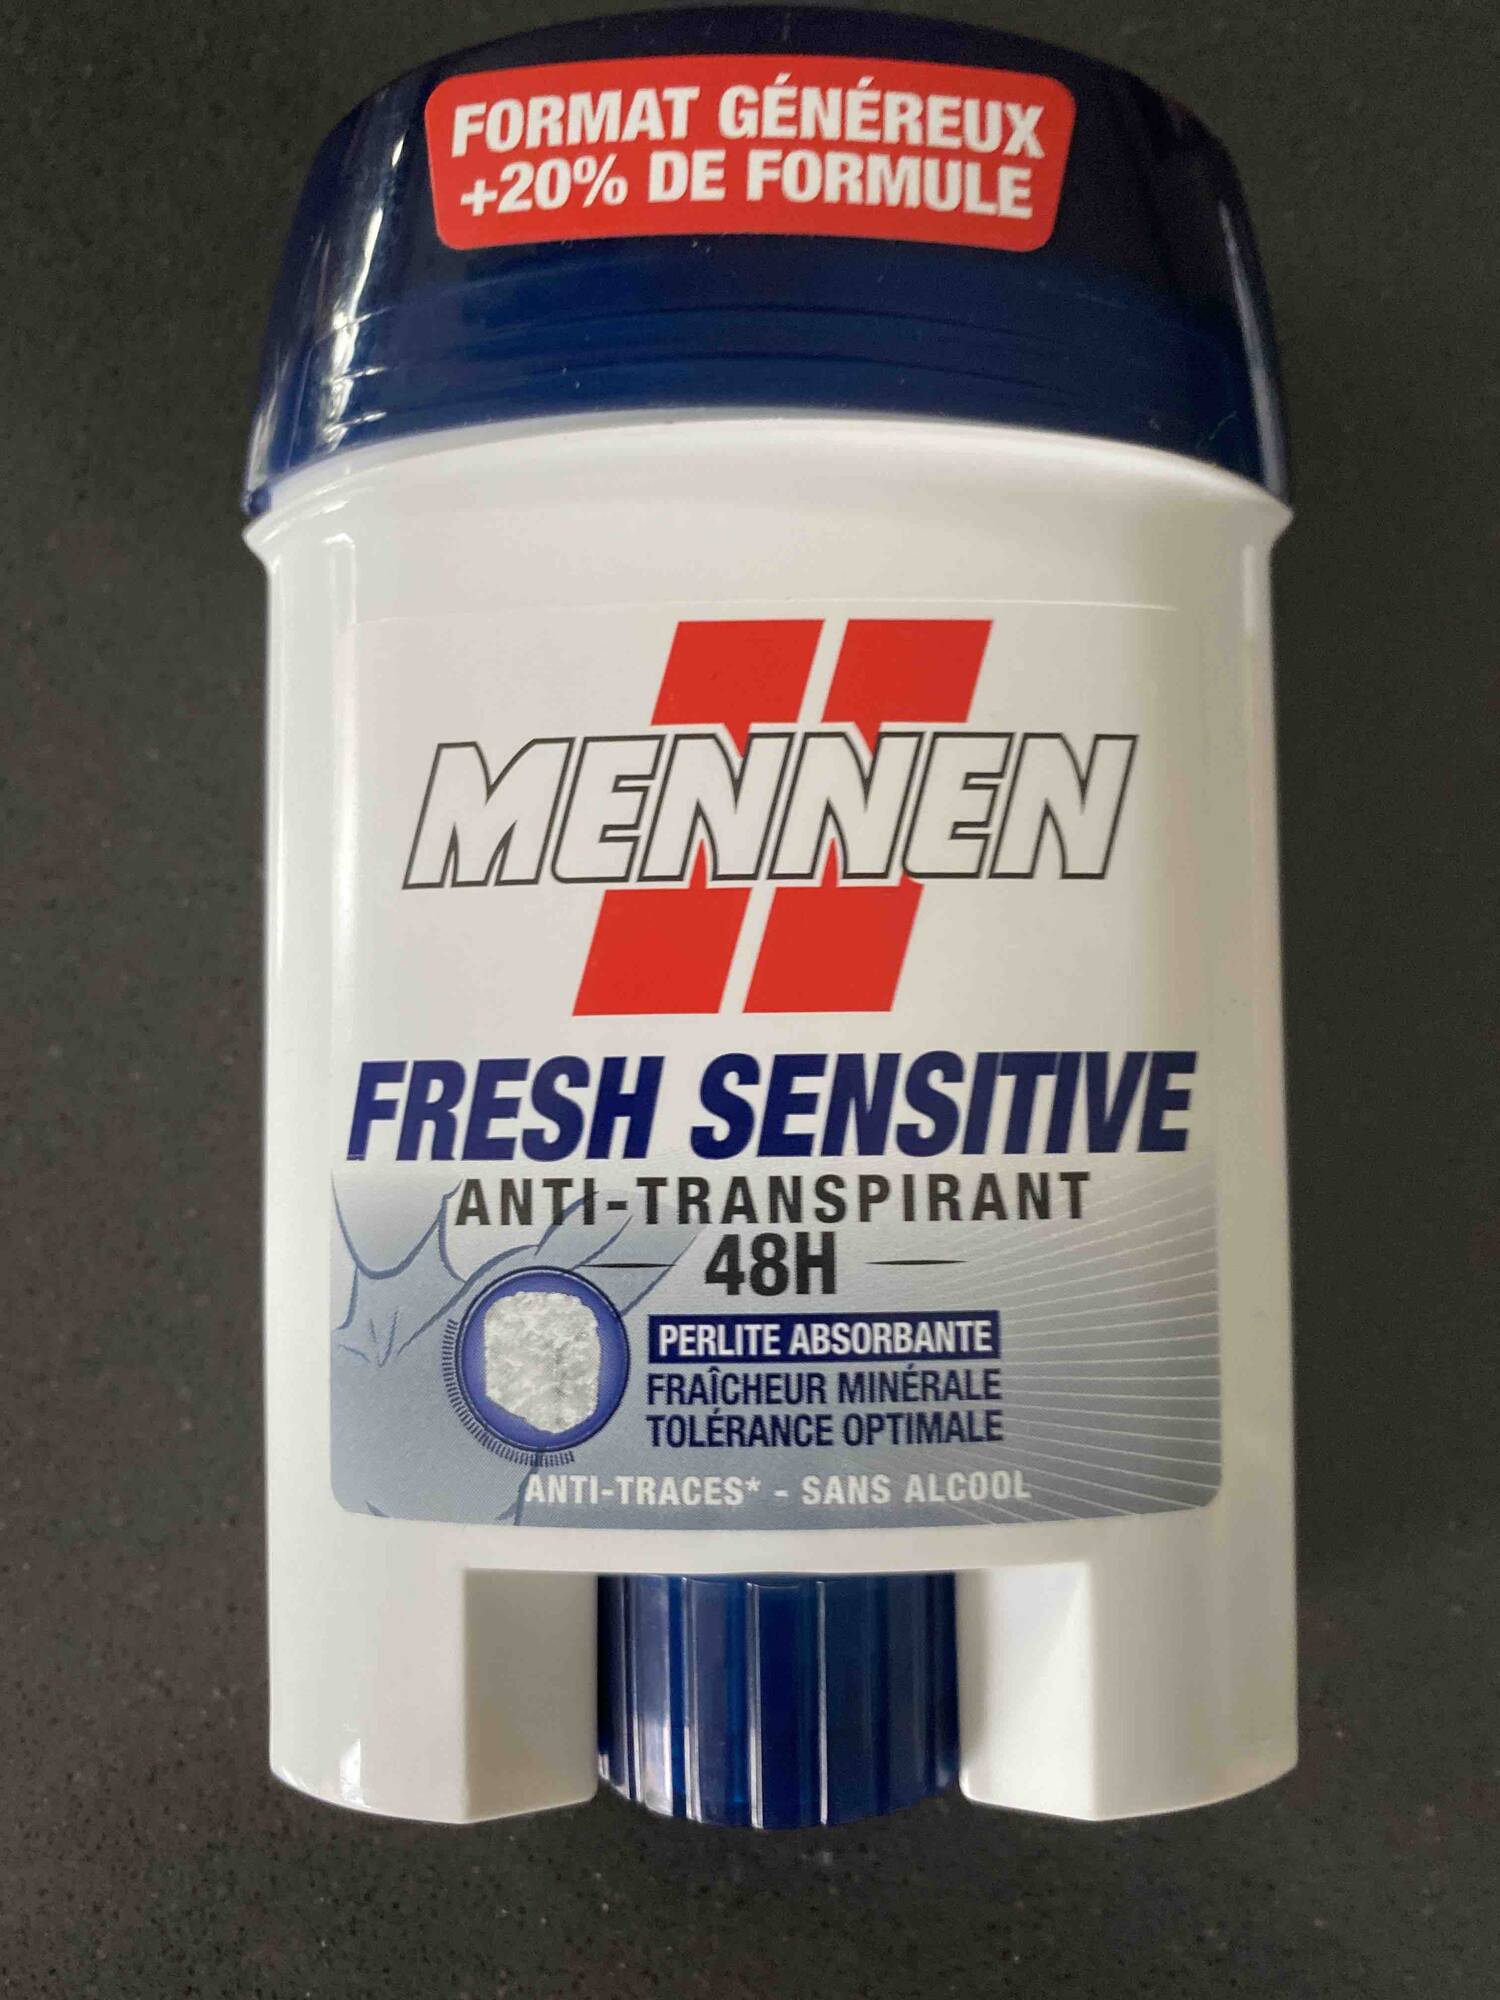 MENNEN - Fresh sensitive anti-transpirant 48h